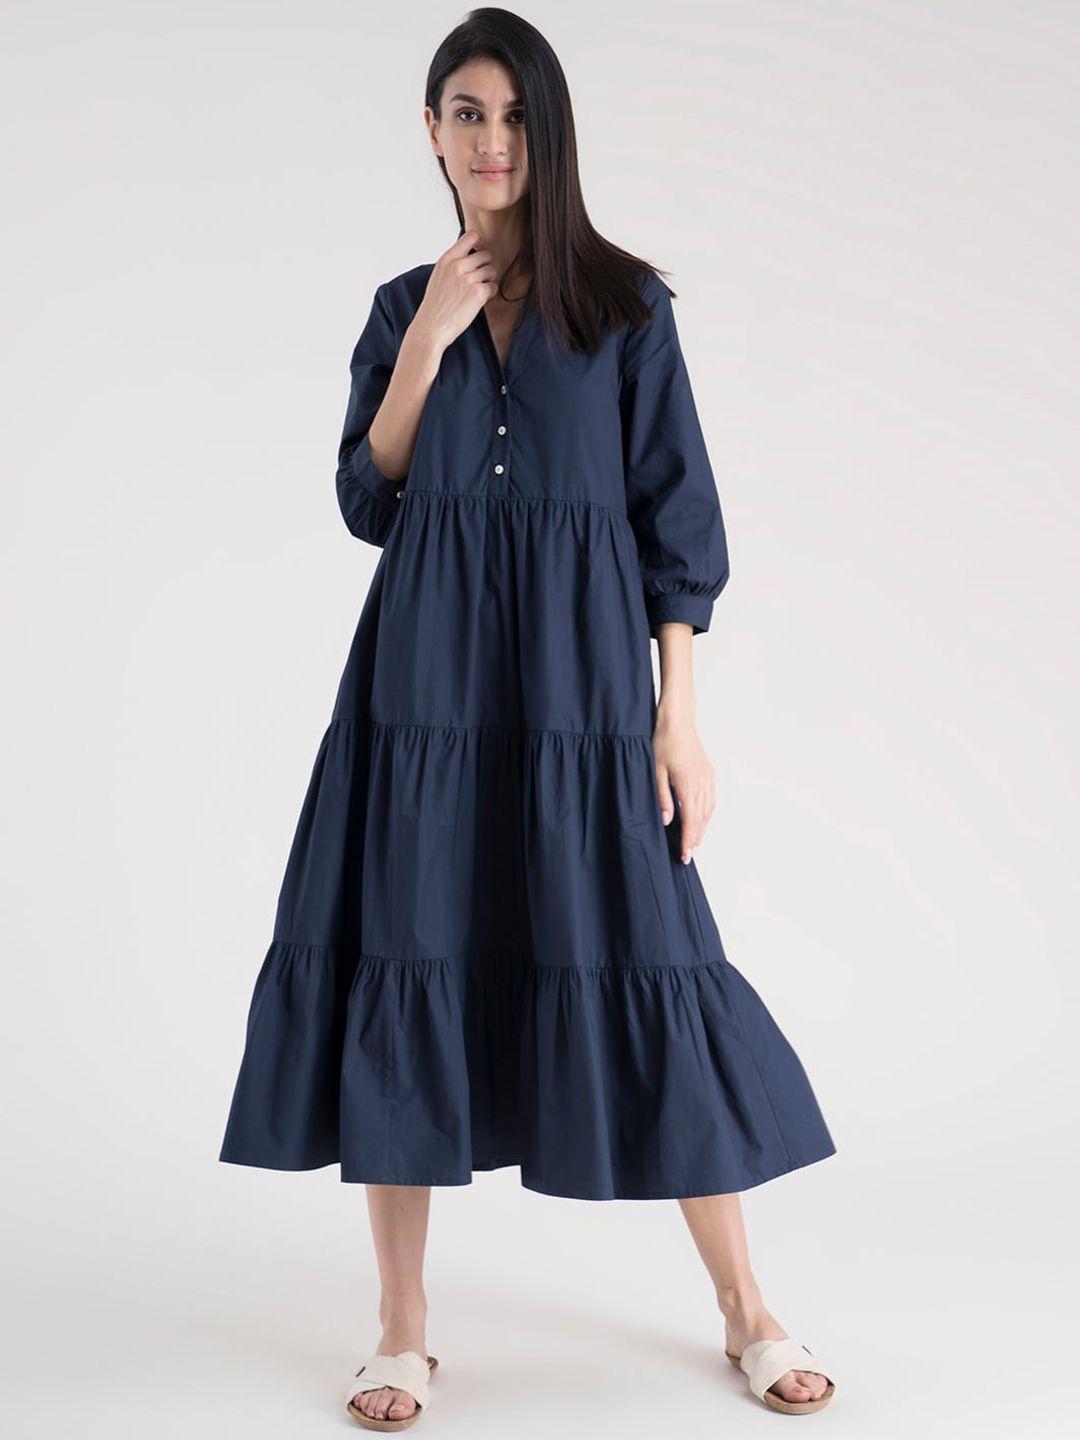 fablestreet navy blue a-line midi dress